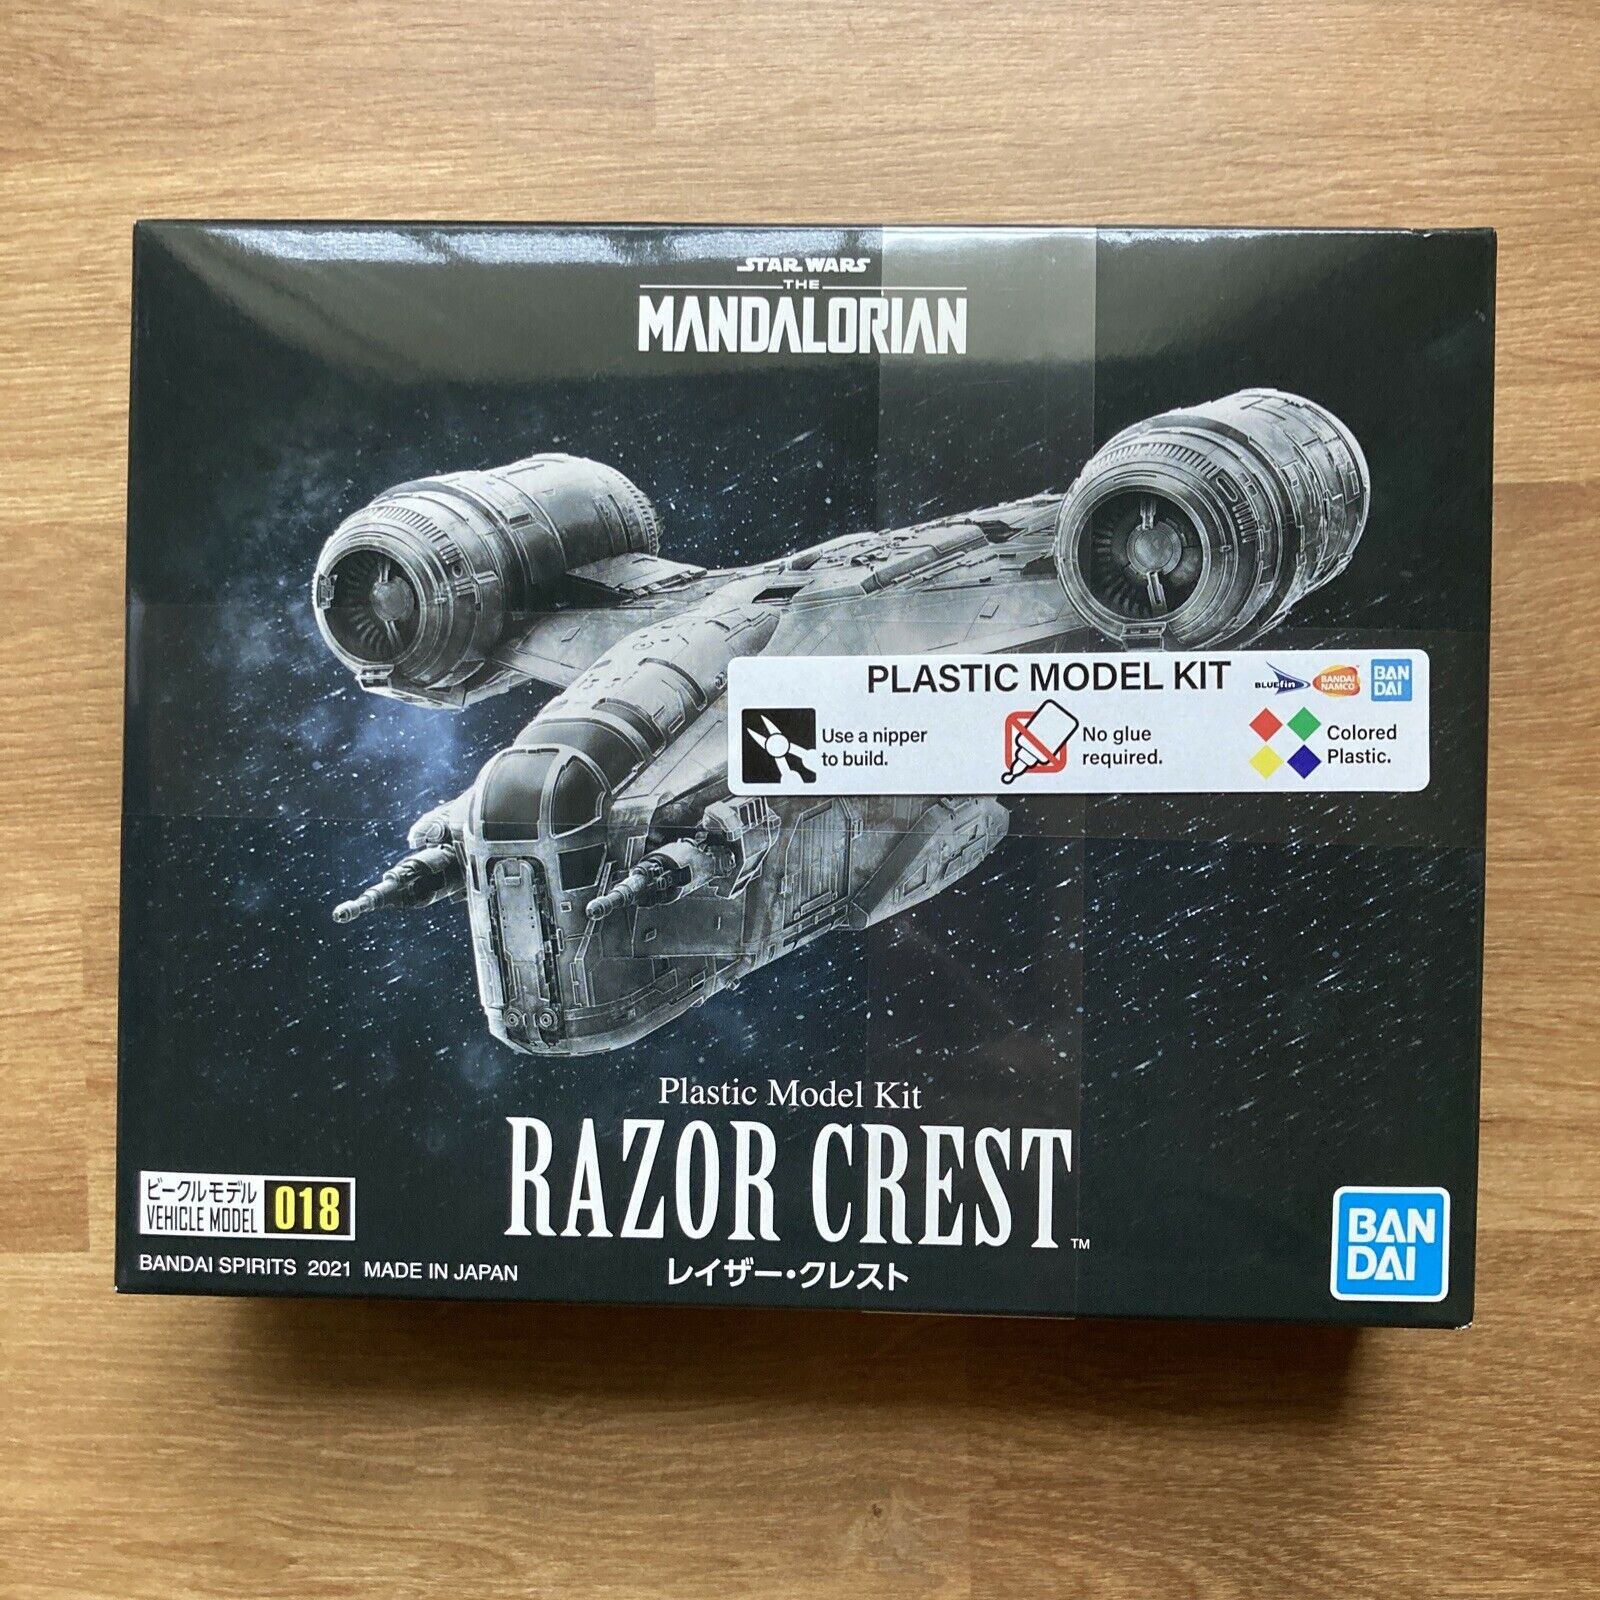 Bandai Star Wars Razor Crest Model 018 From The Mandalorian New Factory Sealed